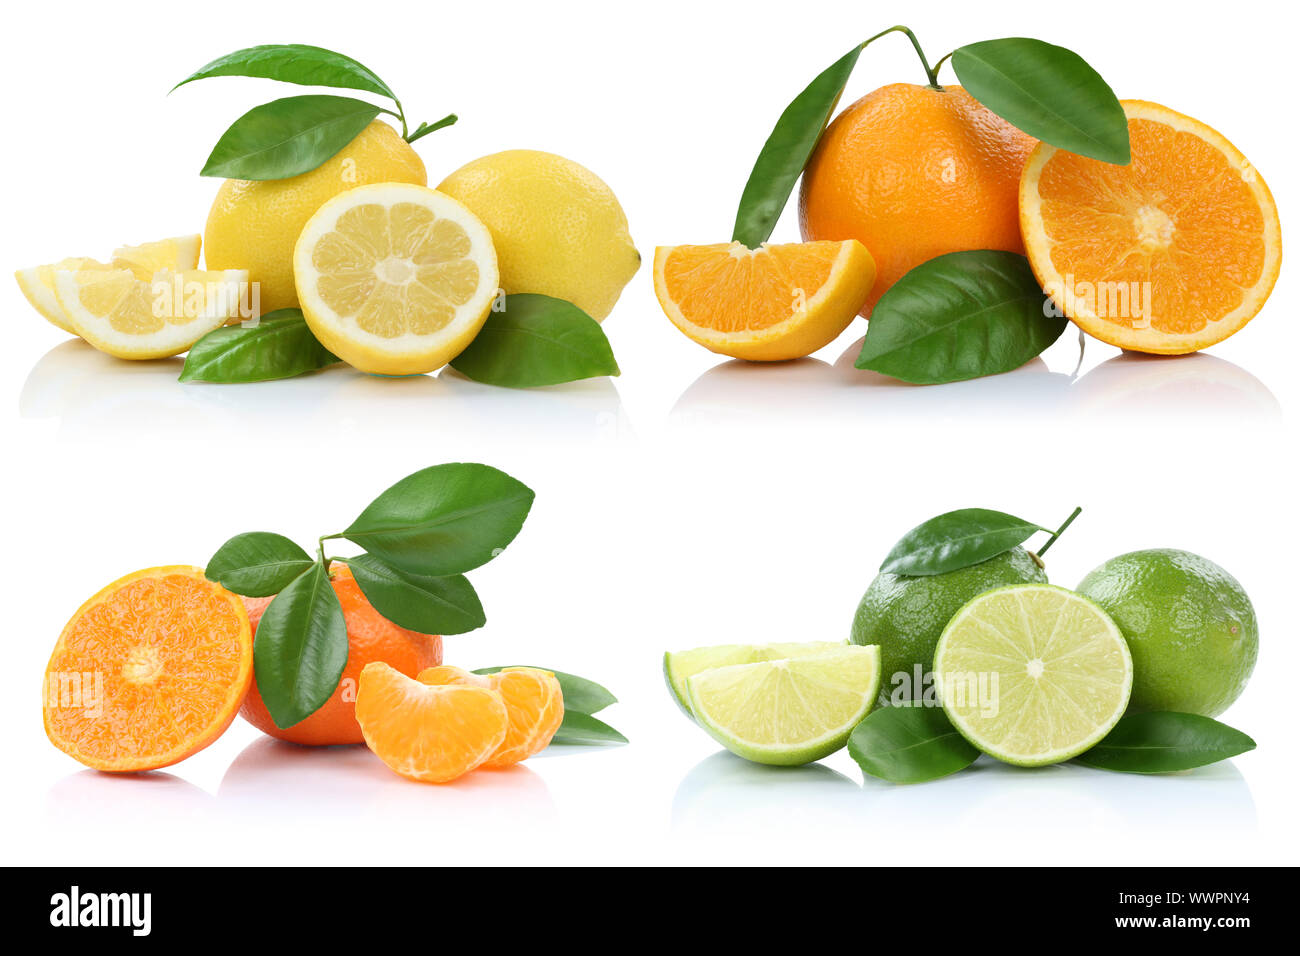 collection oranges lemons mandarins fruits exempted isolated isolated Stock Photo